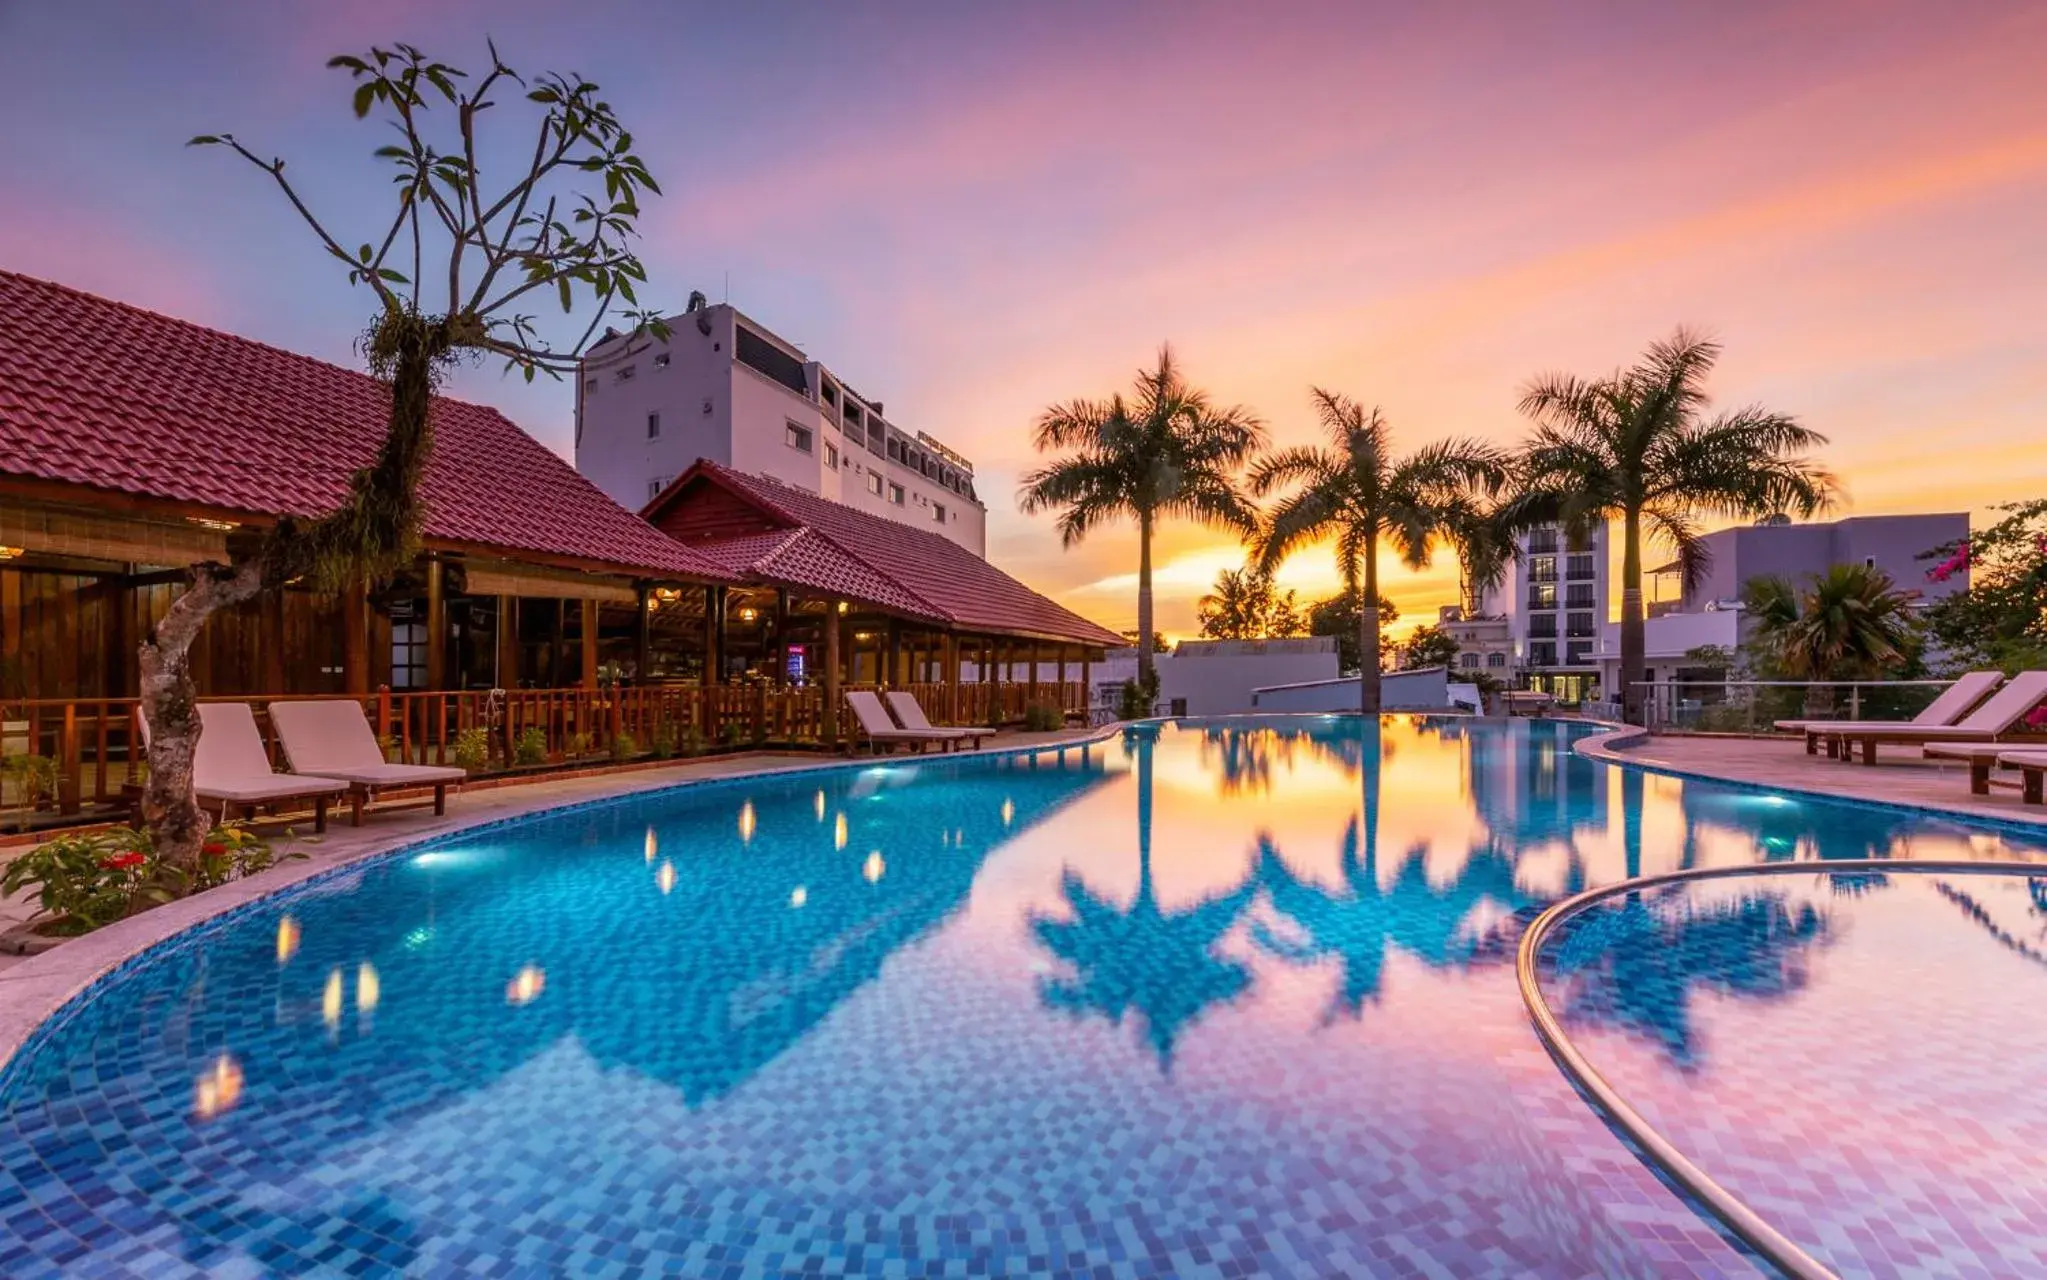 Swimming pool in Suncosy Central Resort